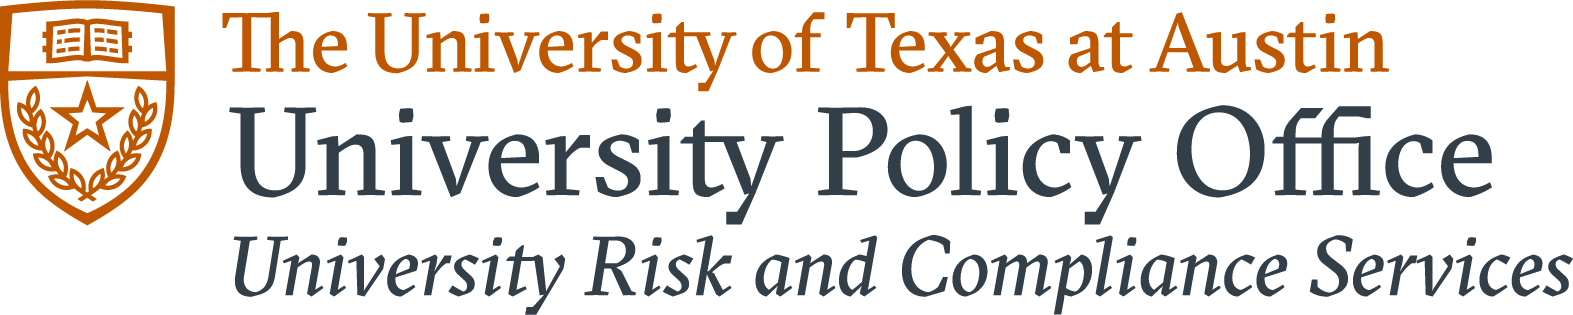 University Policy Office wordmark